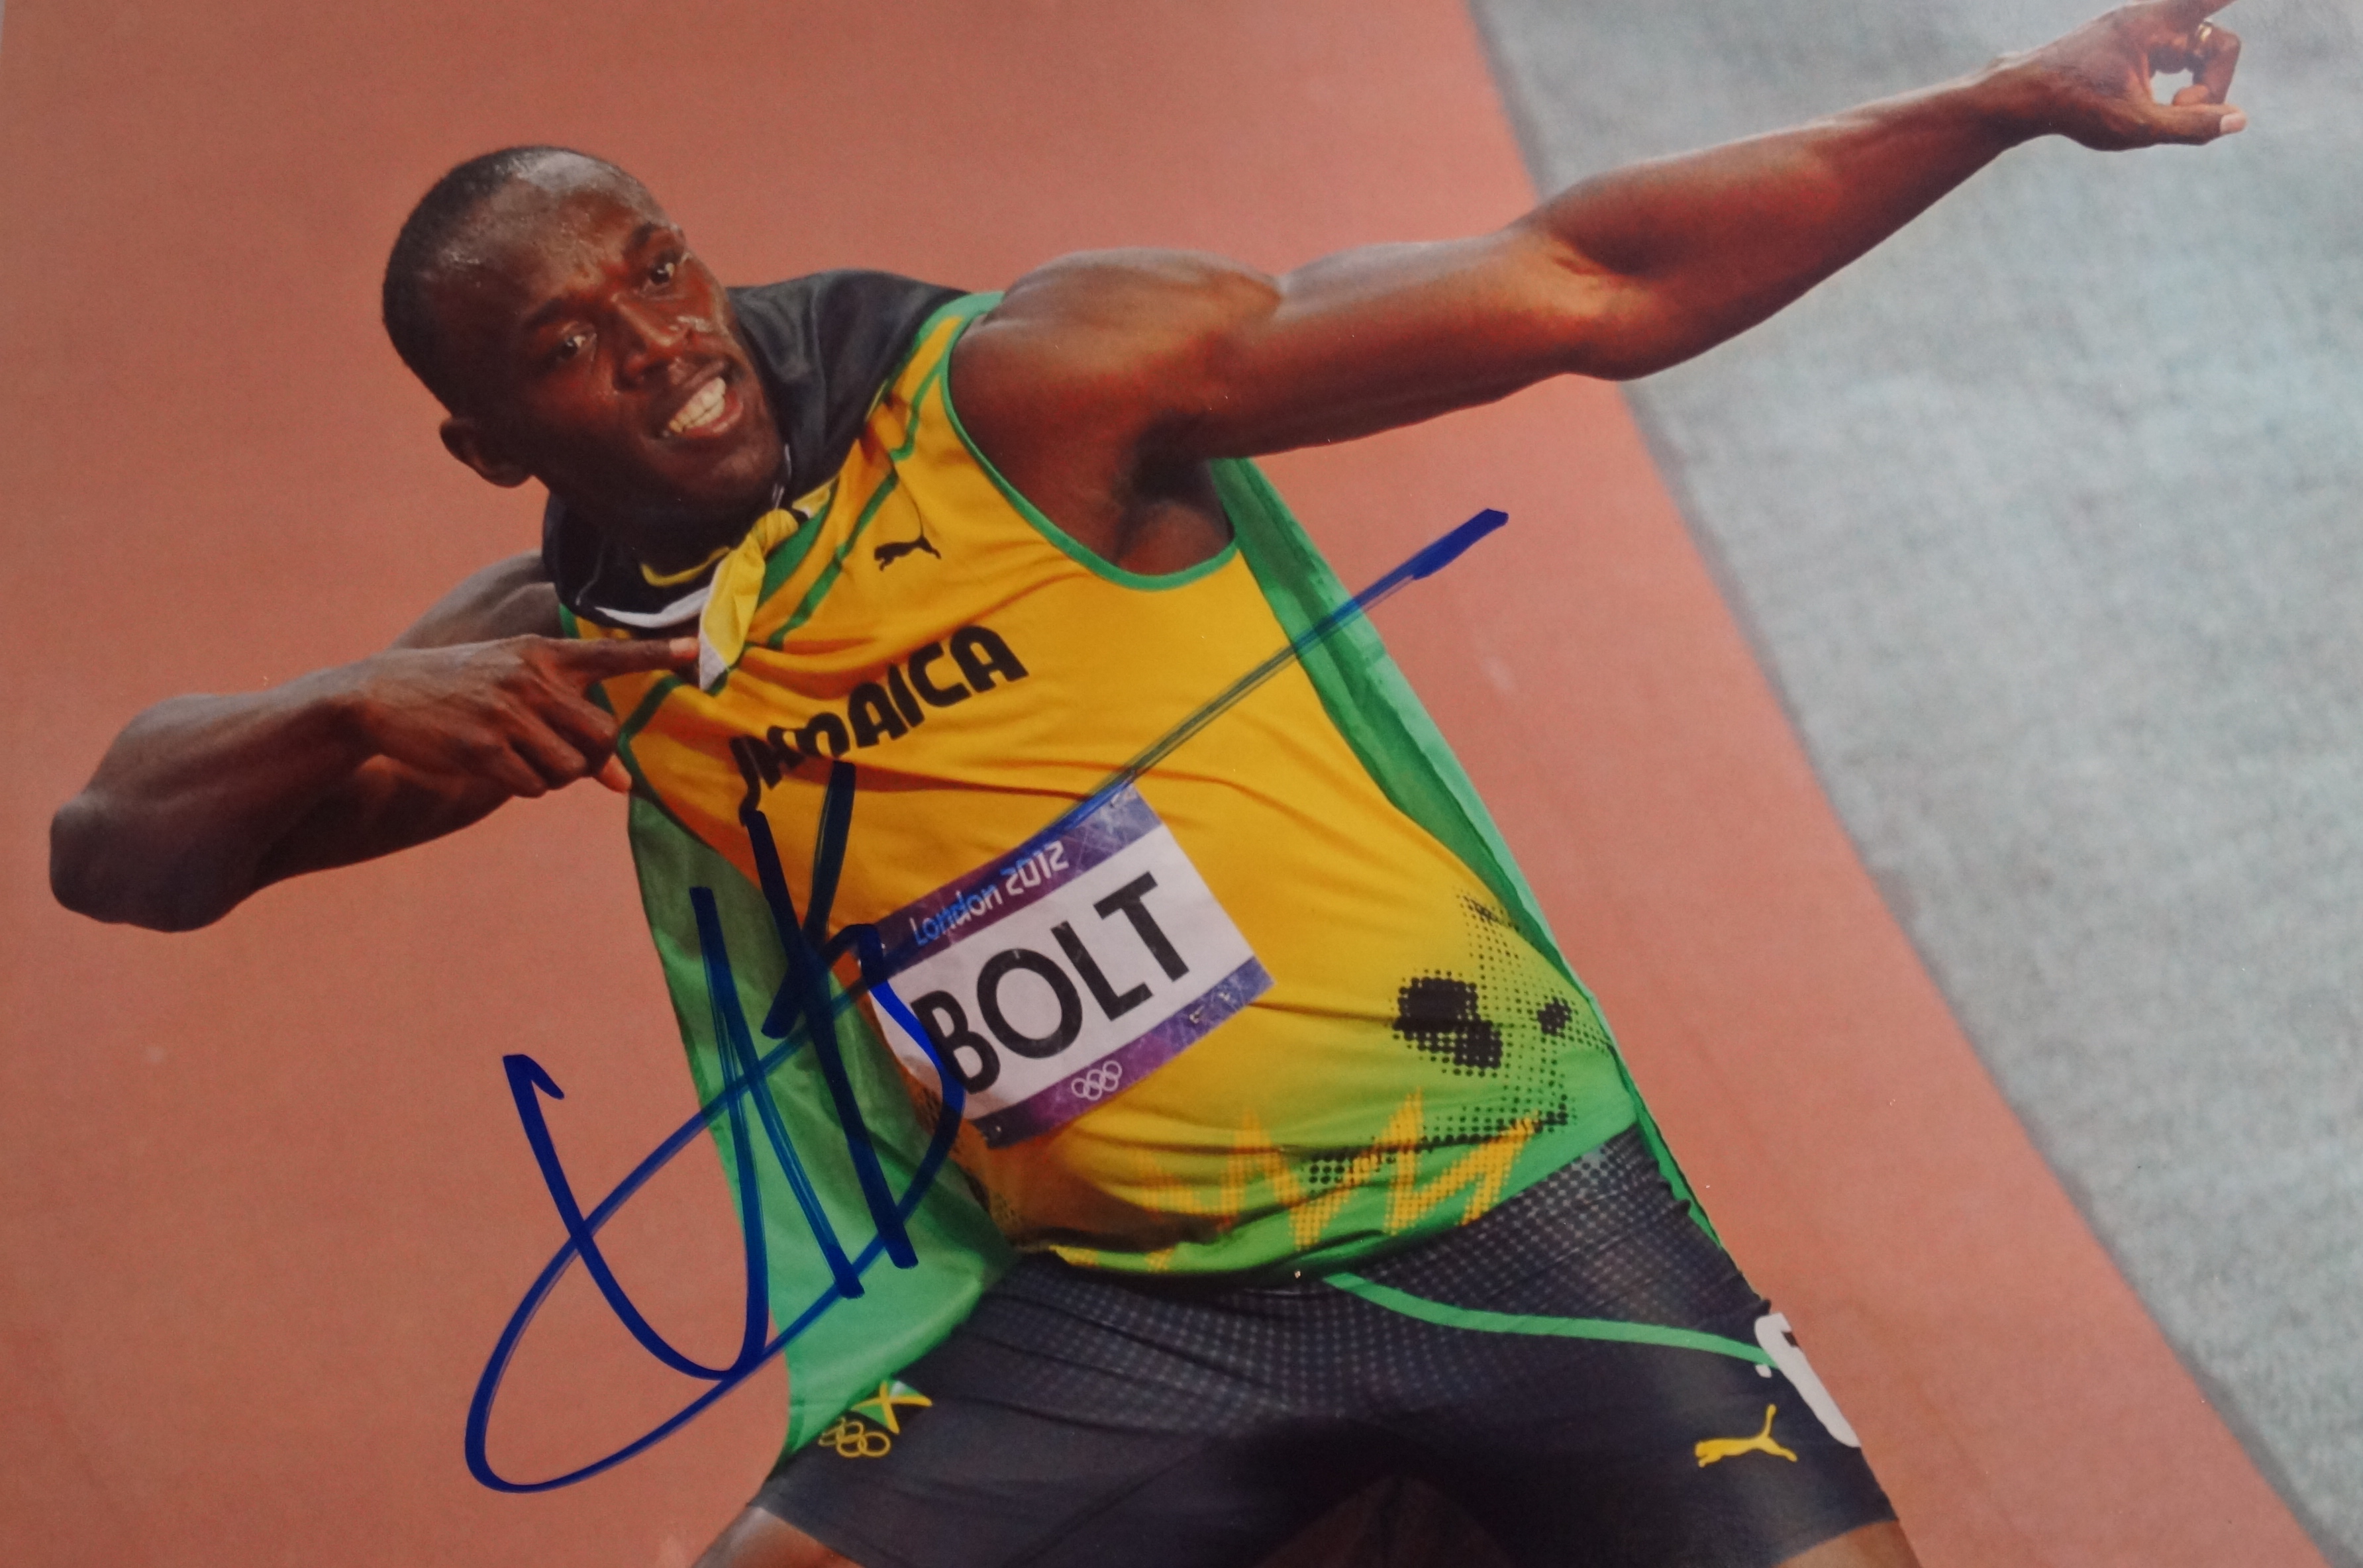 Signed Photograph of Usain Bolt, COA and COA Stamp